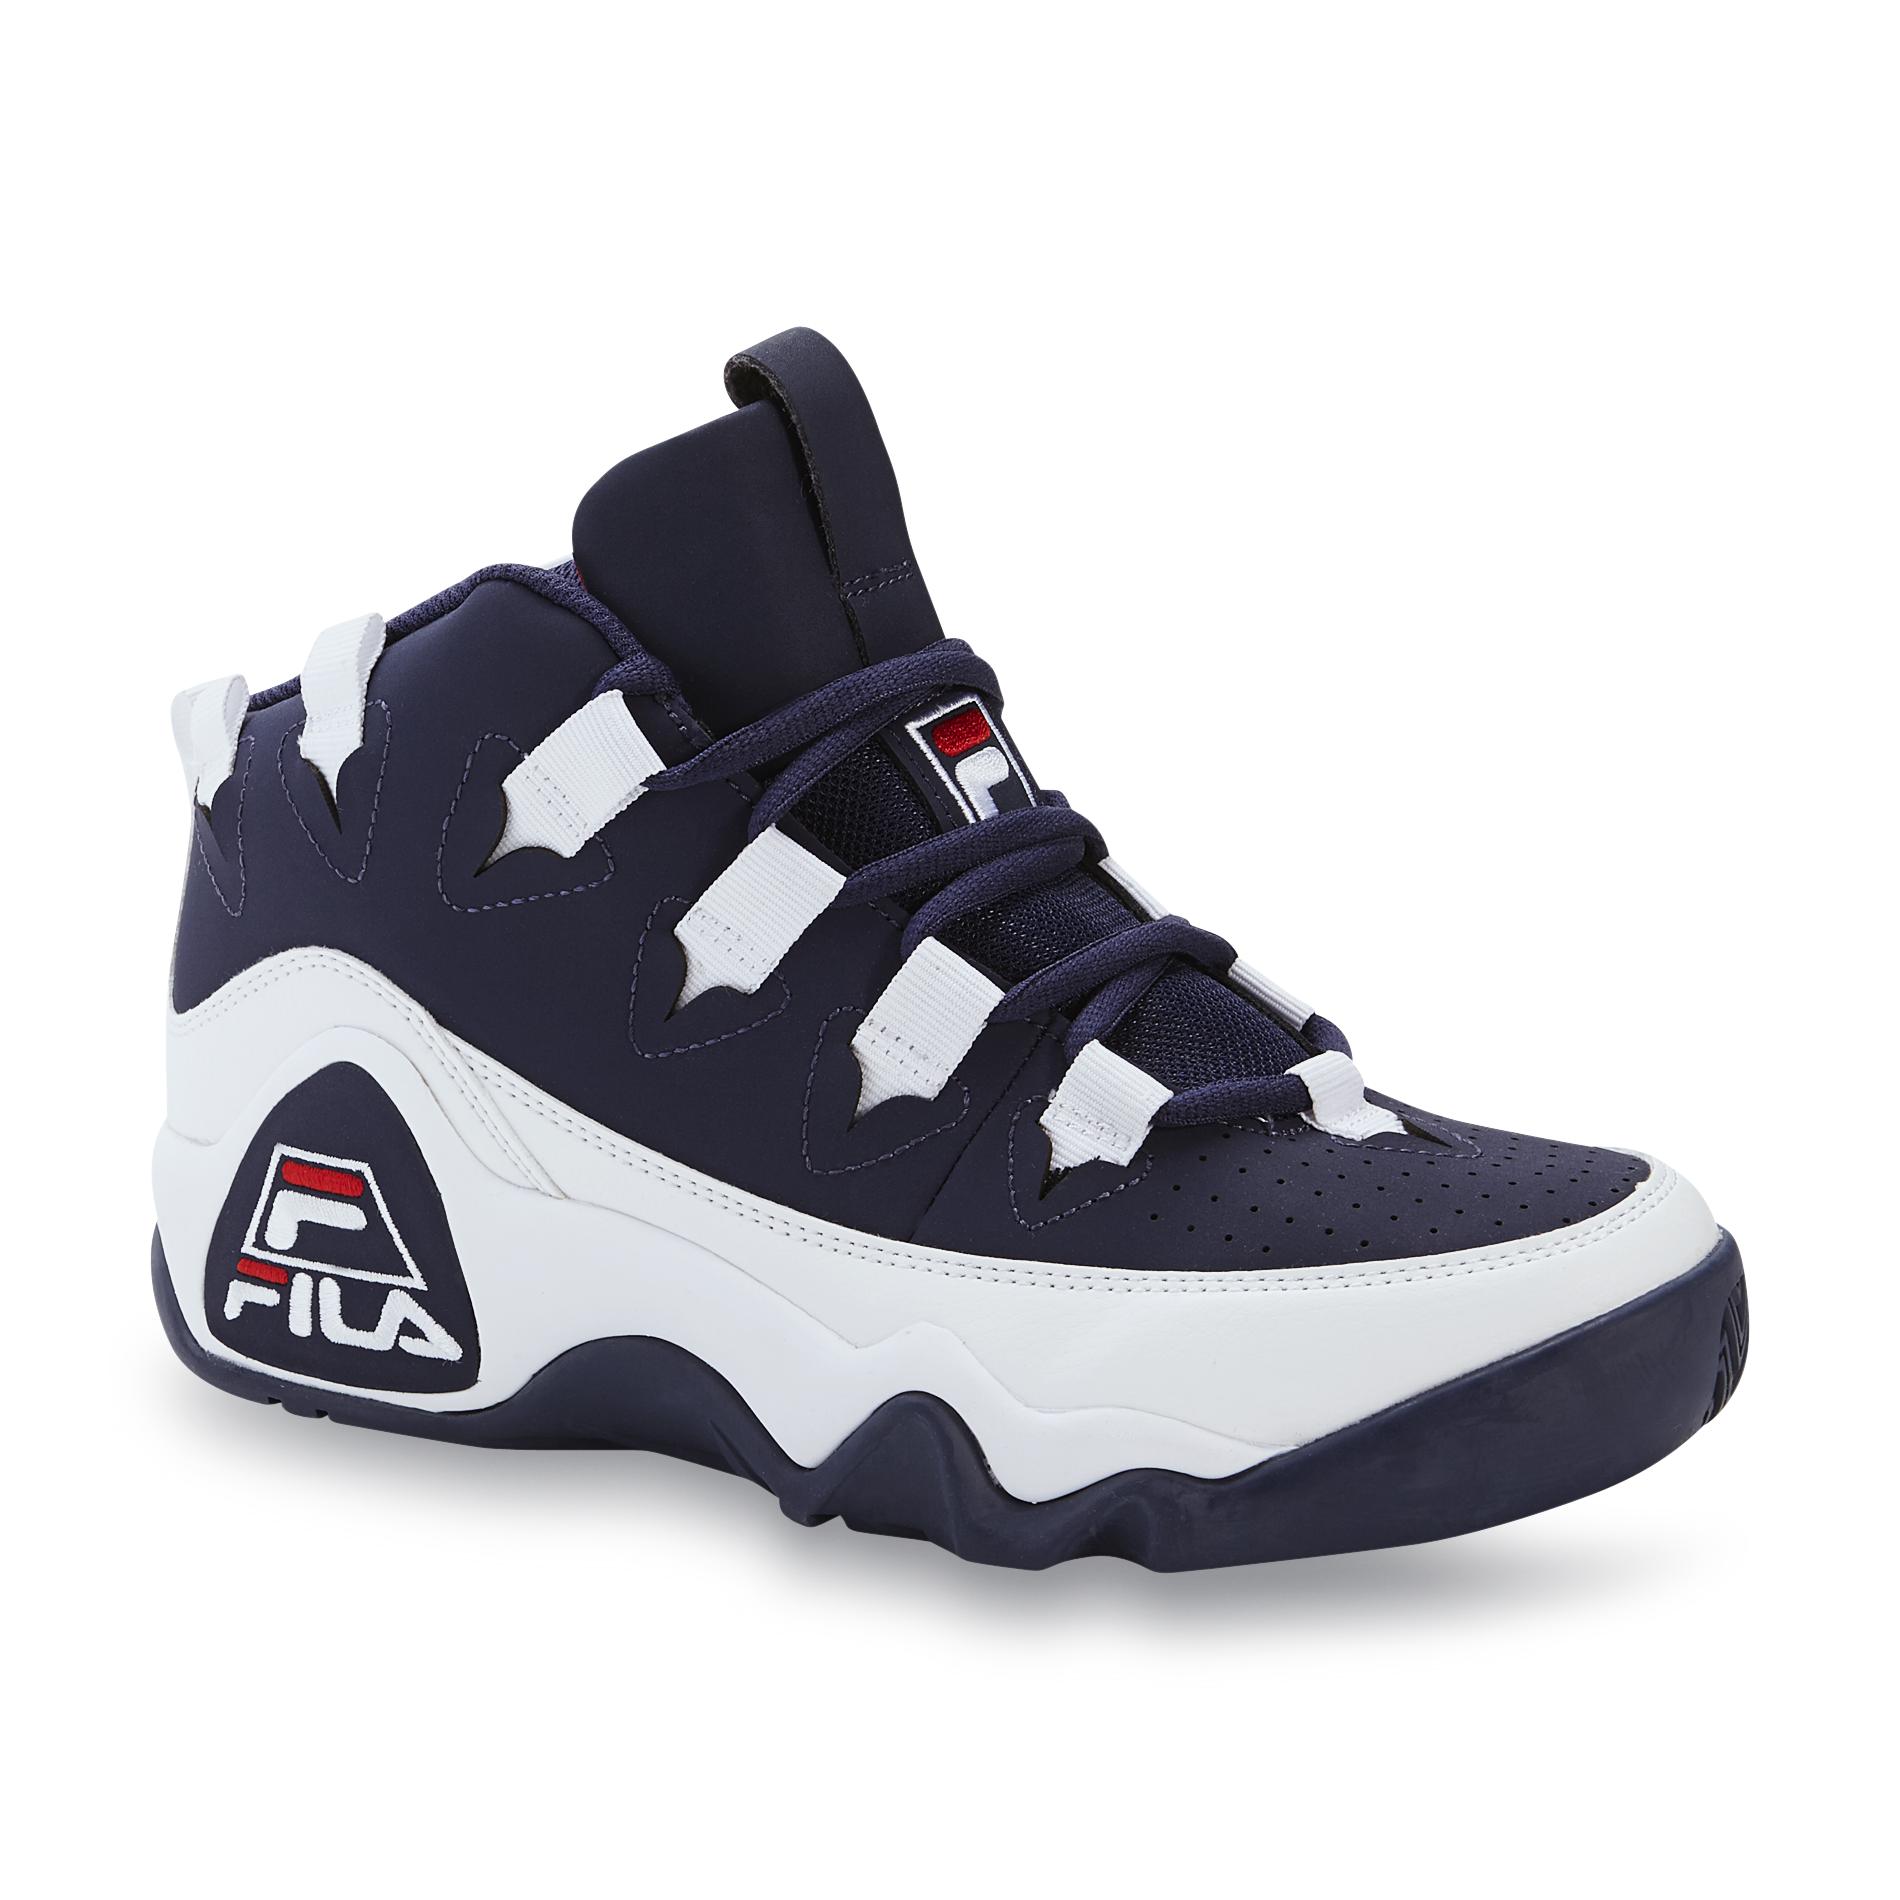 Fila Men's 95 Red/White/Navy HighTop Basketball Shoe